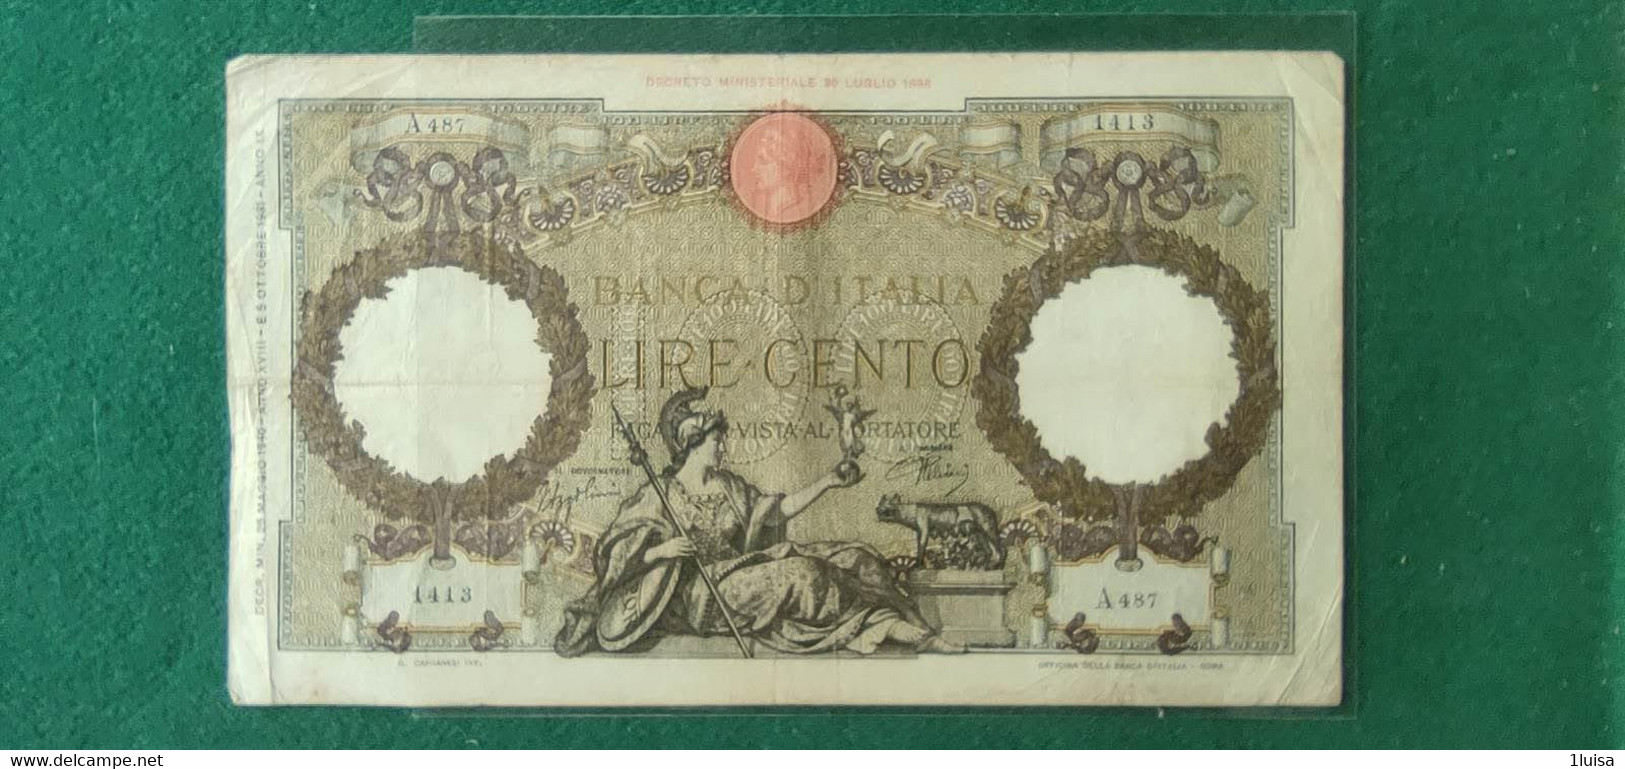 Italia 100 Lire 25/5/1940 - 100 Lire